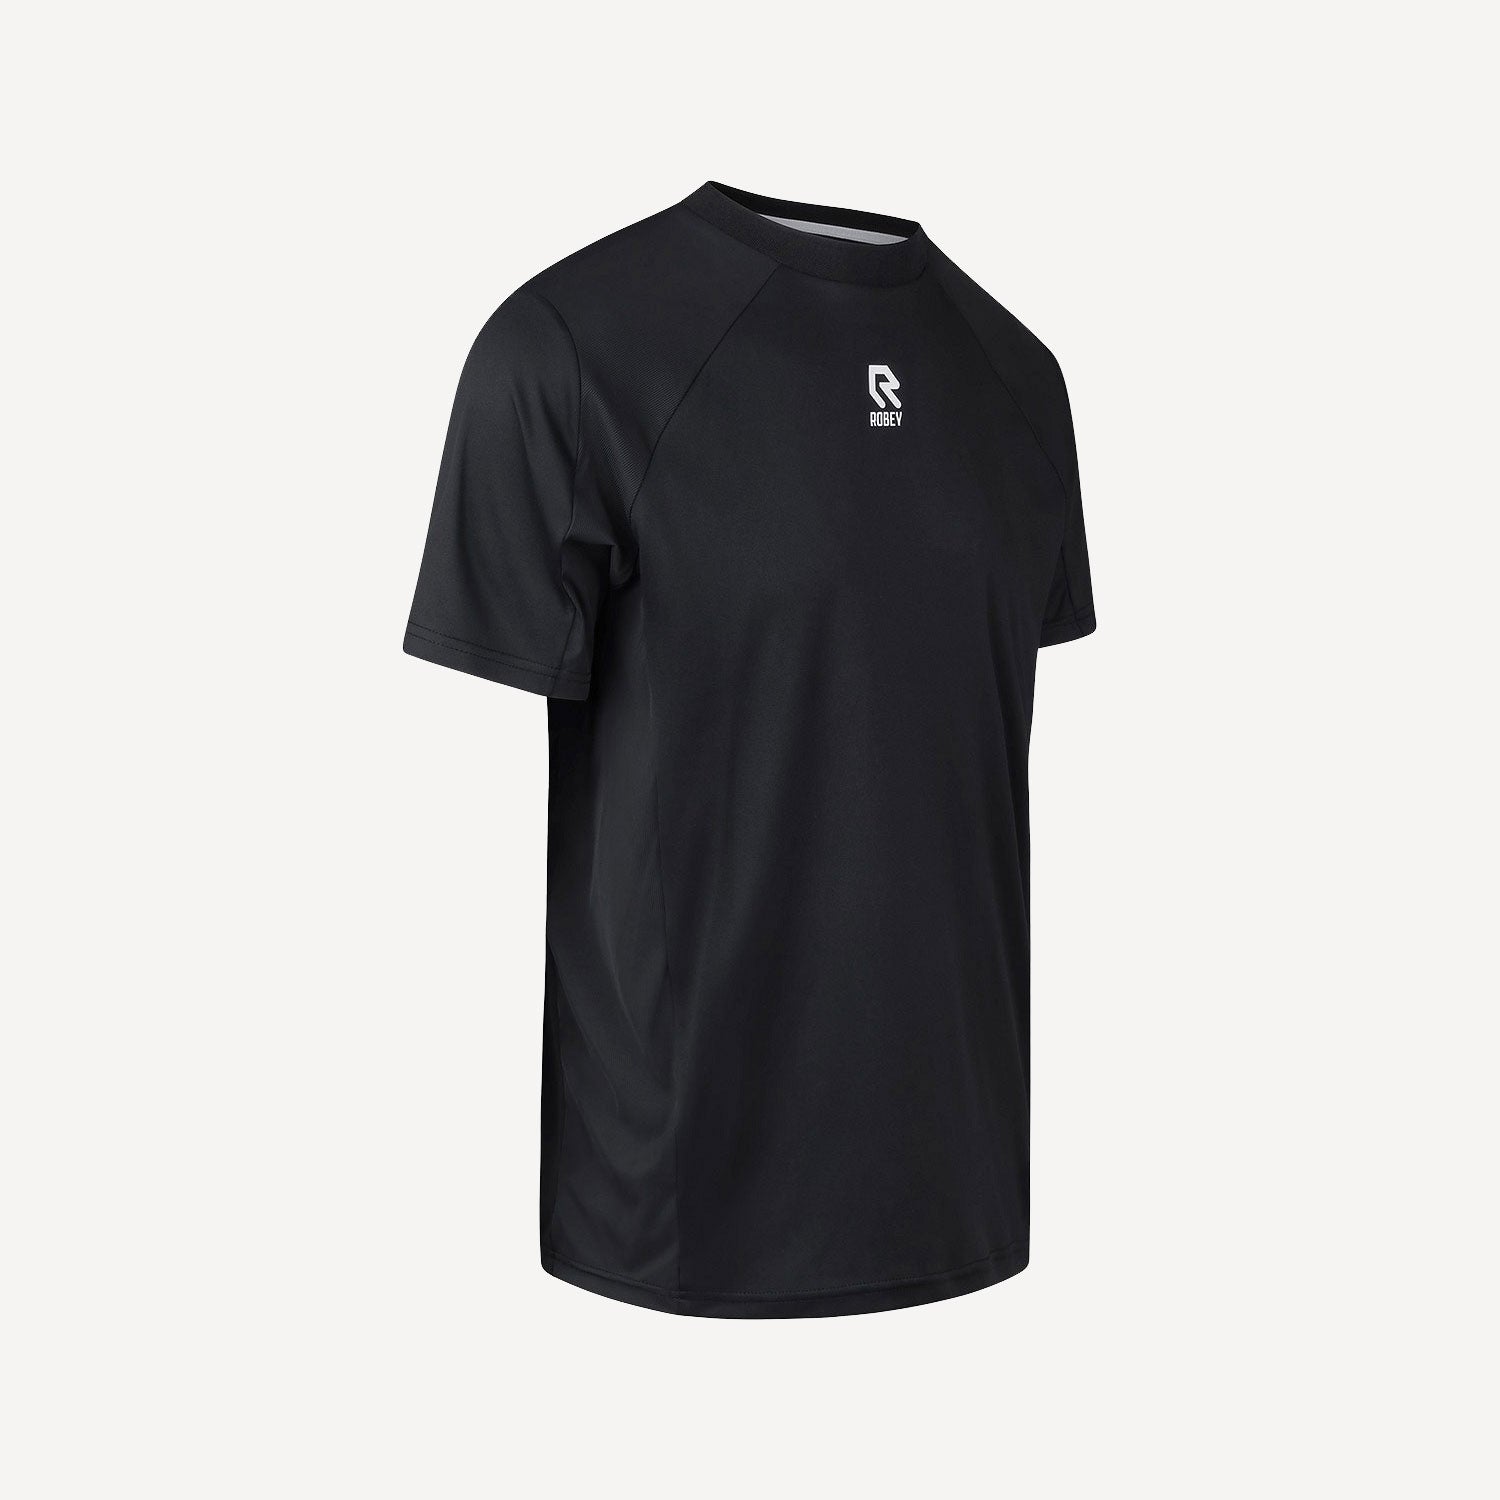 Robey Ace Men's Tennis Shirt - Black (3)